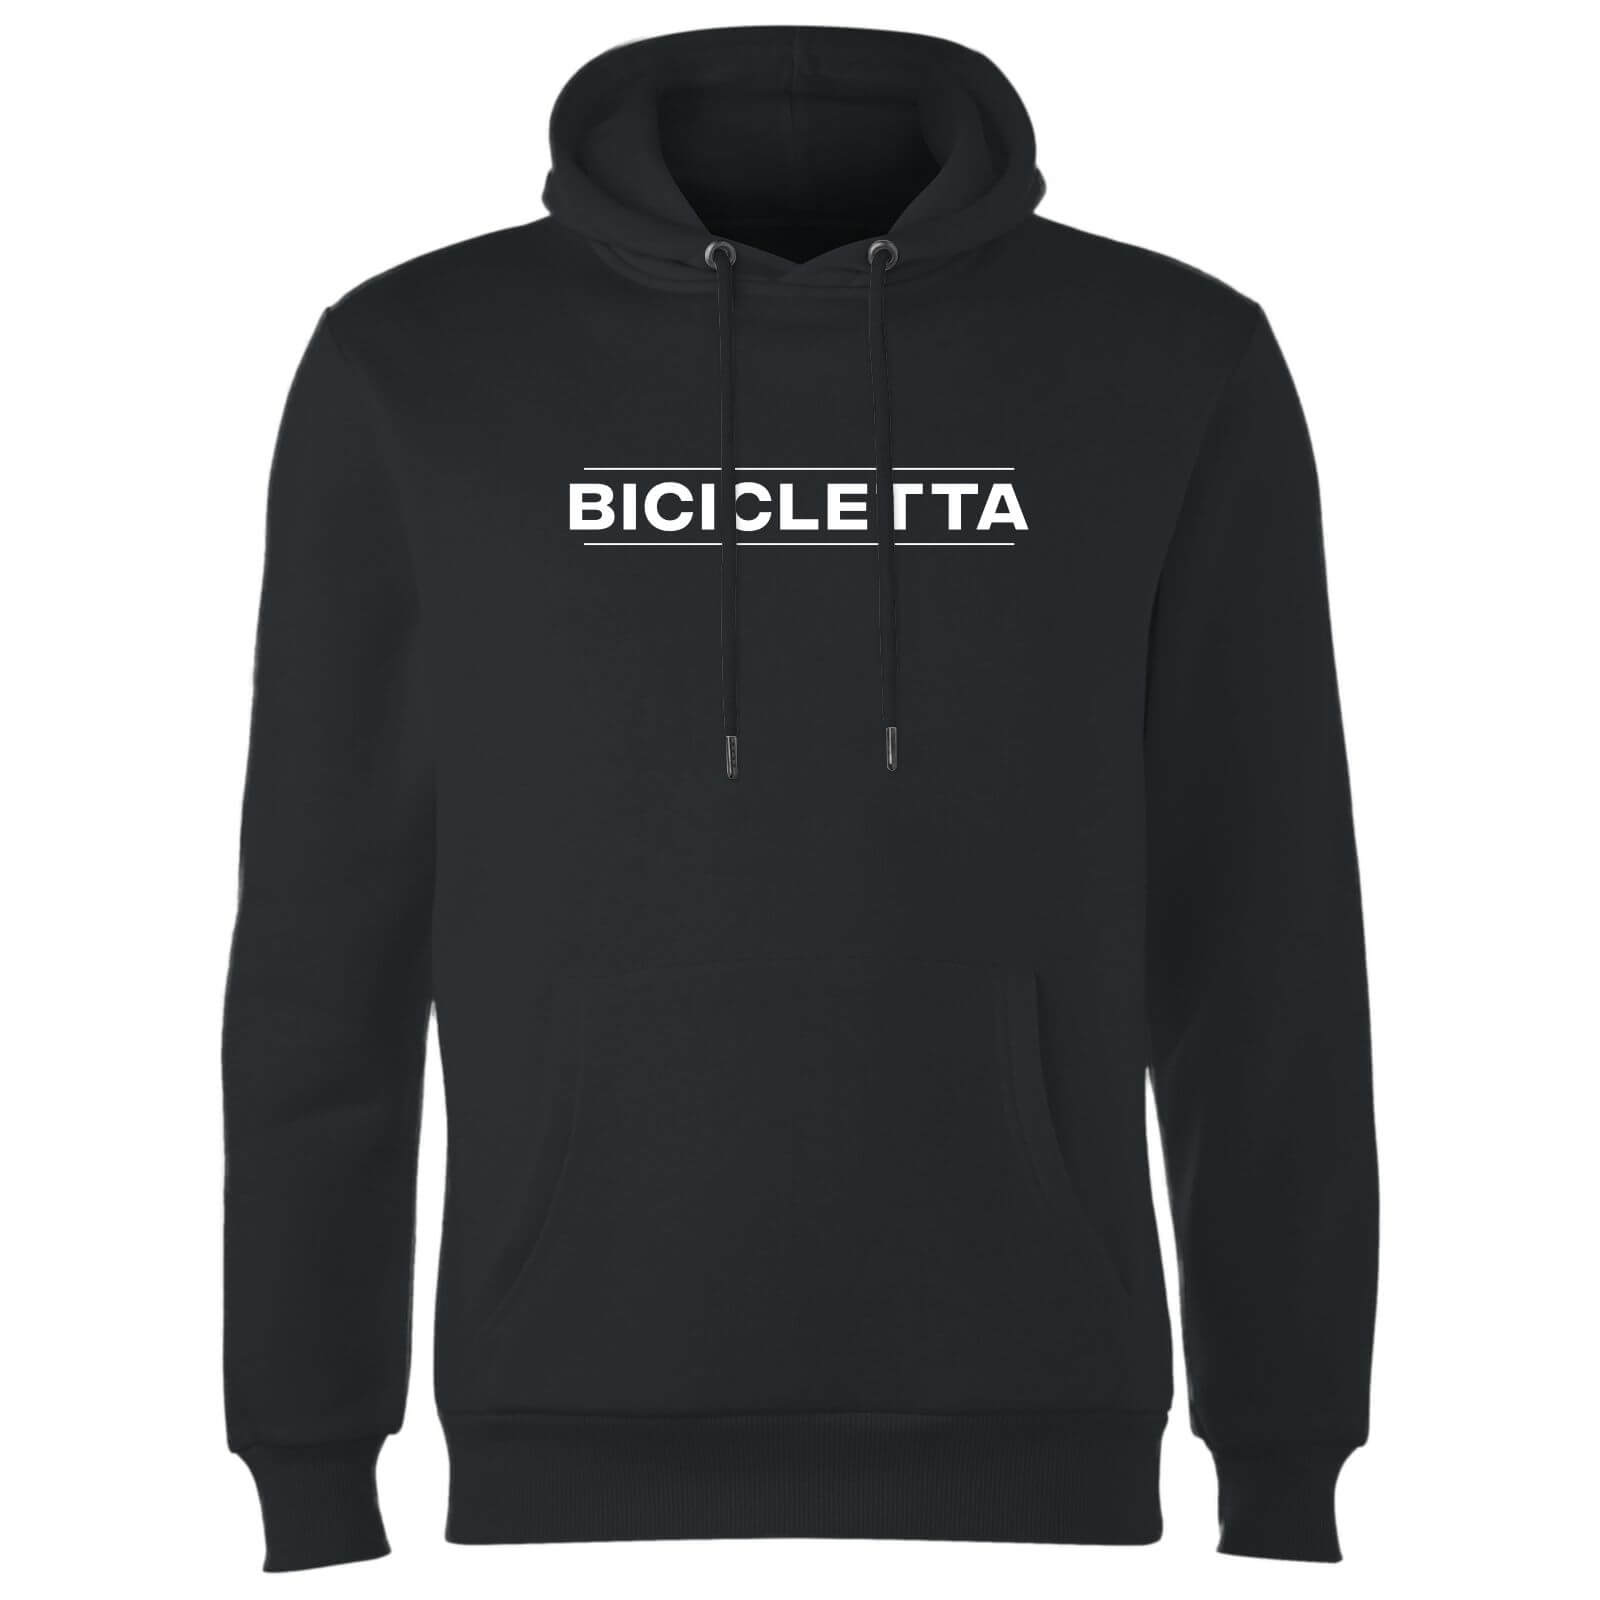 Bicicletta Hoodie - Black - XXL - Schwarz